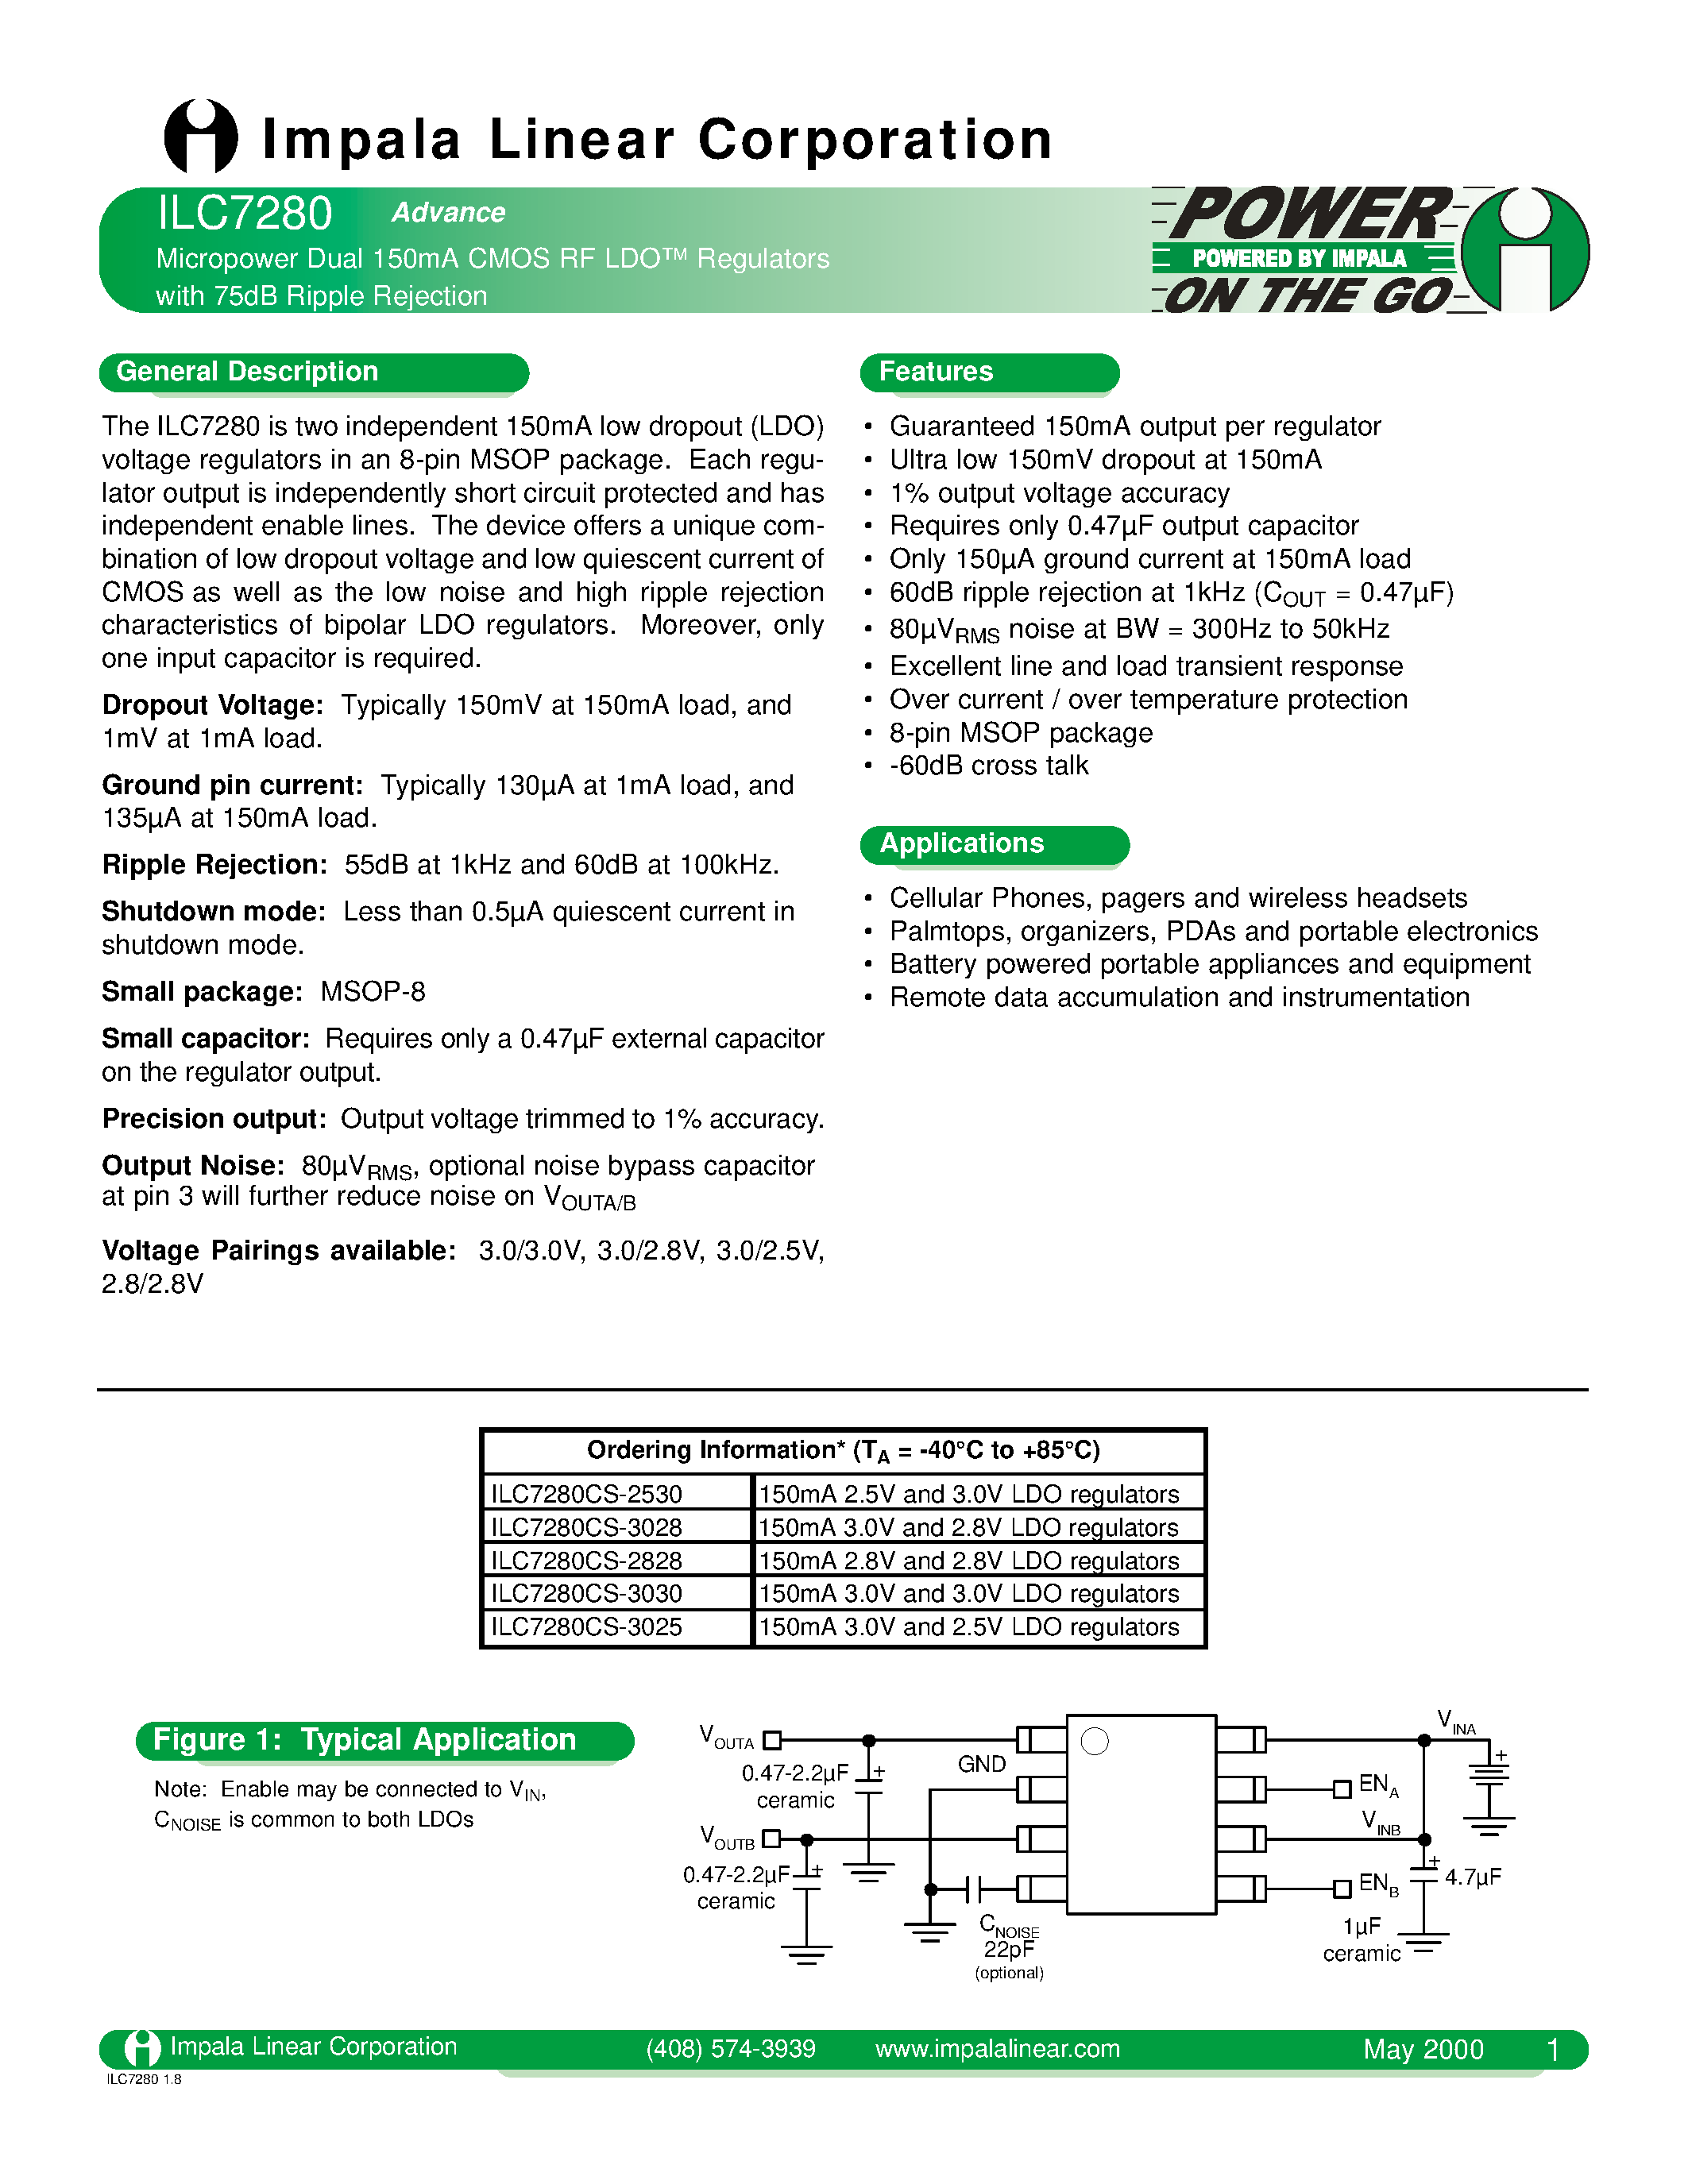 Даташит ILC7280CS-3025 - MICROPOWER DUAL 150MA CMOS RF LDO REGULATORS WITH 75DB RIPPLE REJECTION страница 1